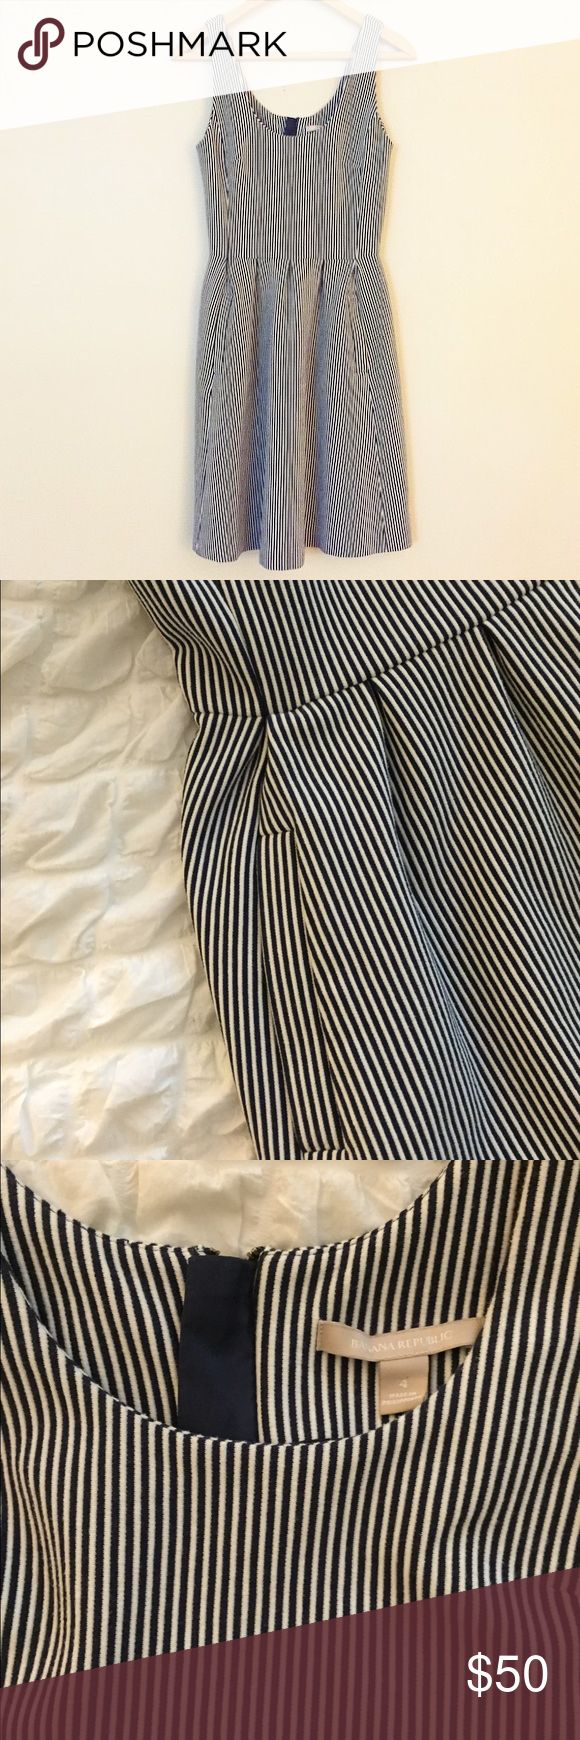 Banana Republic dress Sleeveless navy and white striped dress with